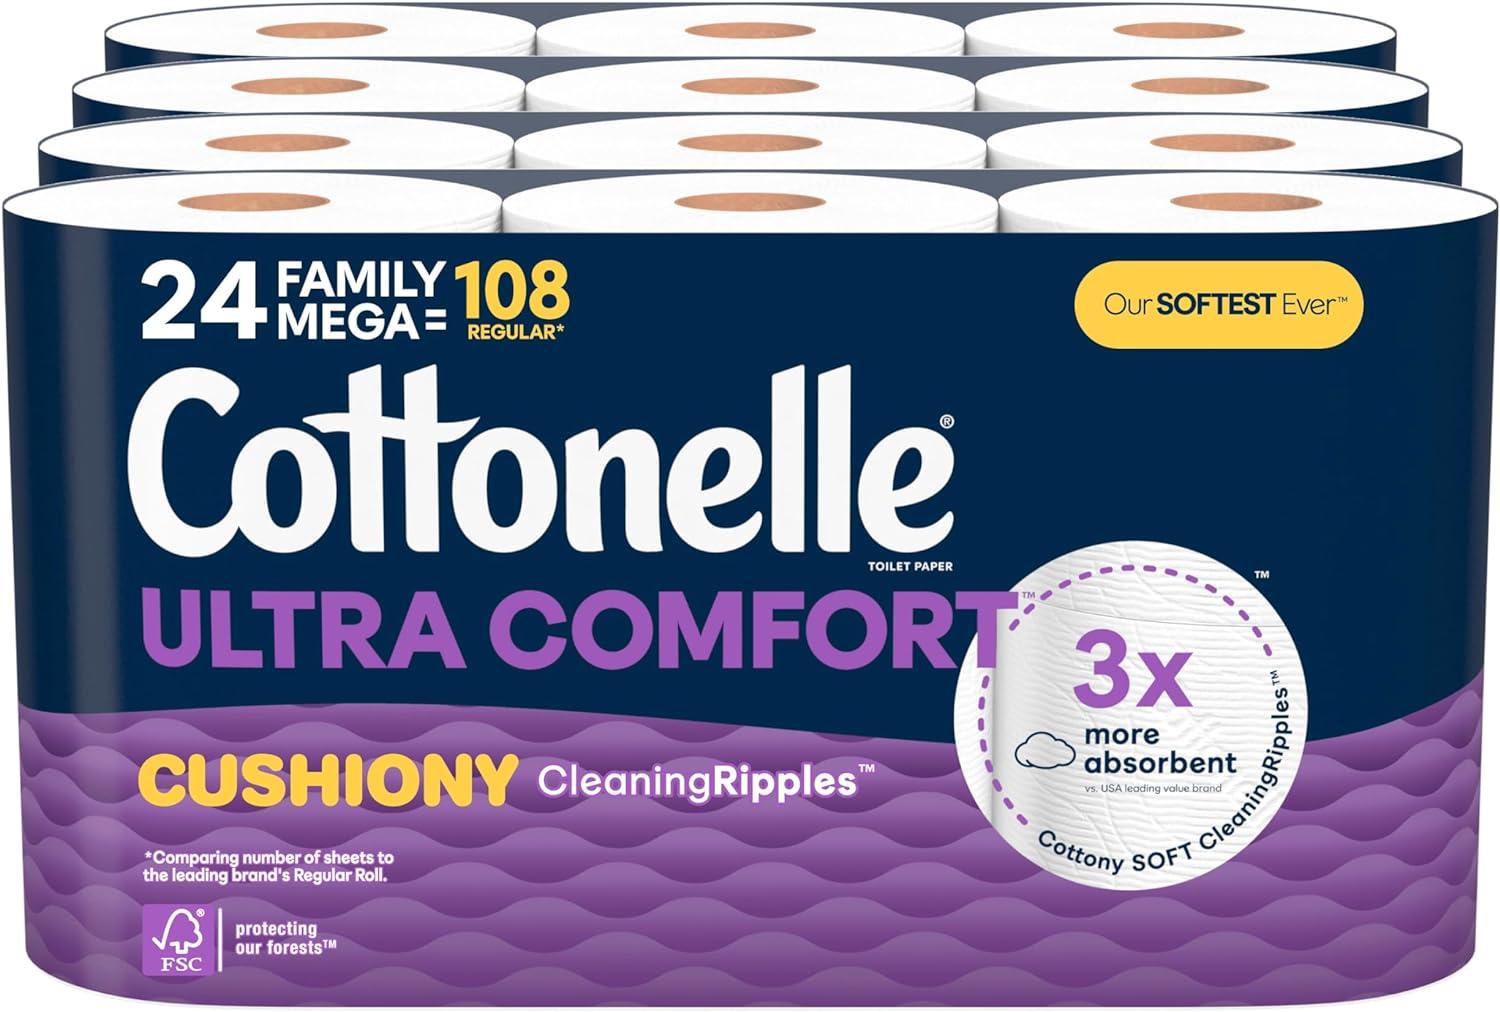 Cottonelle Ultra Comfort Toilet Paper Family Mega Rolls 24 Pack for $22.07